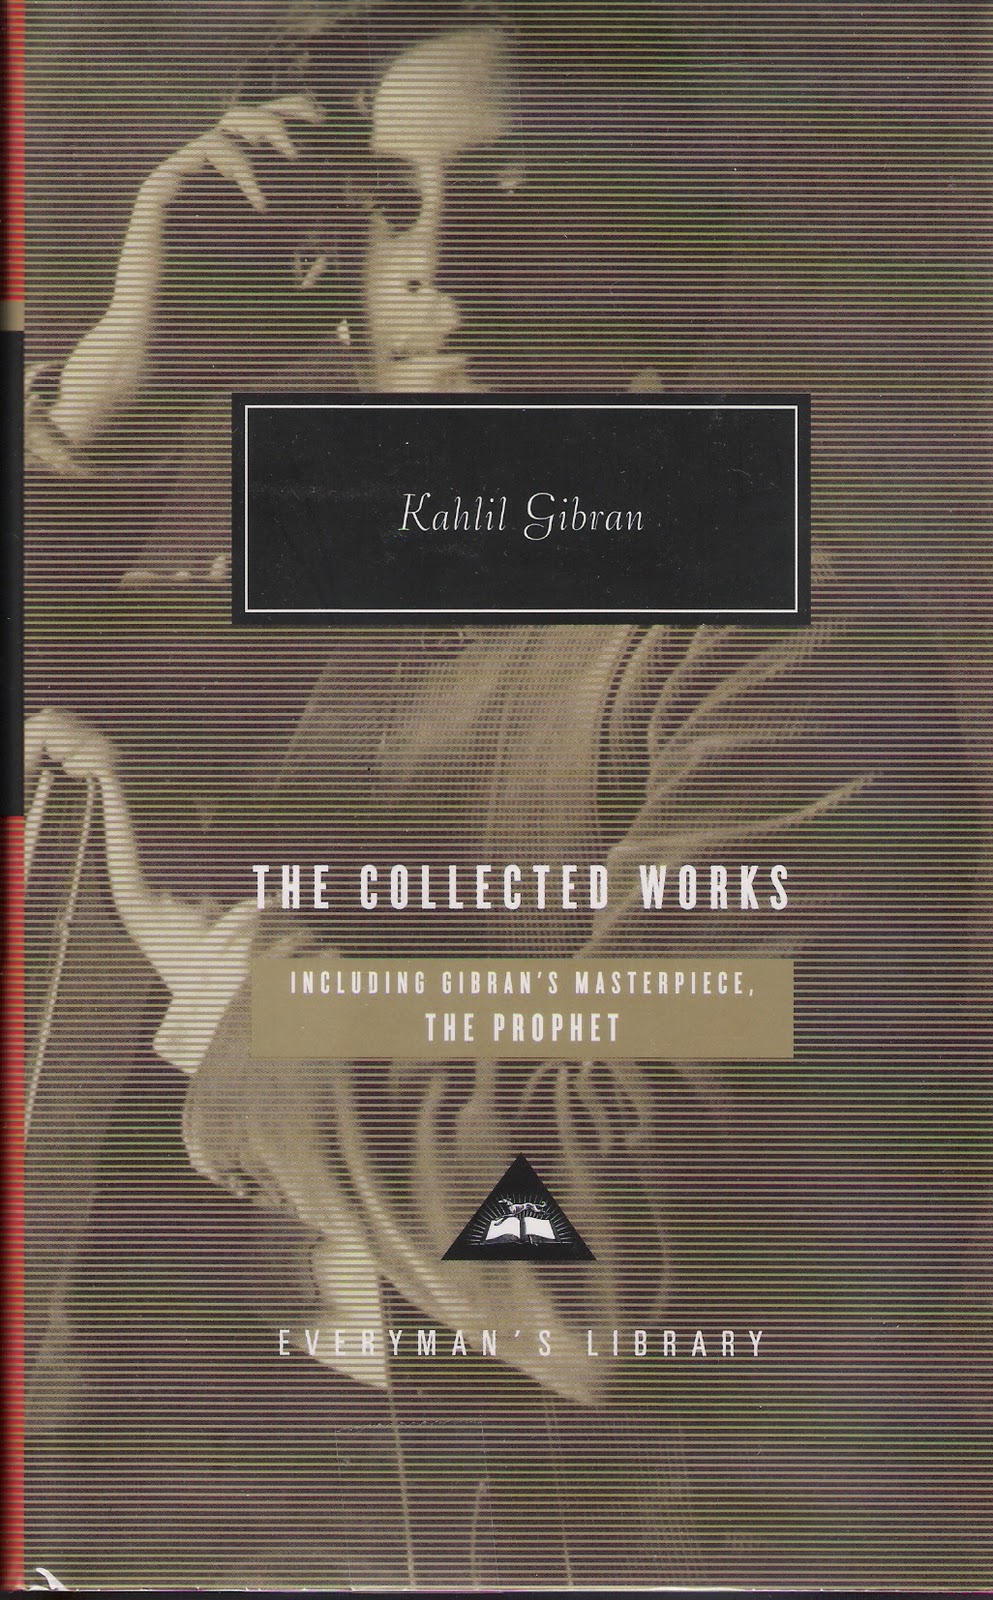 Poems Of Khalil Gibran On Friendship